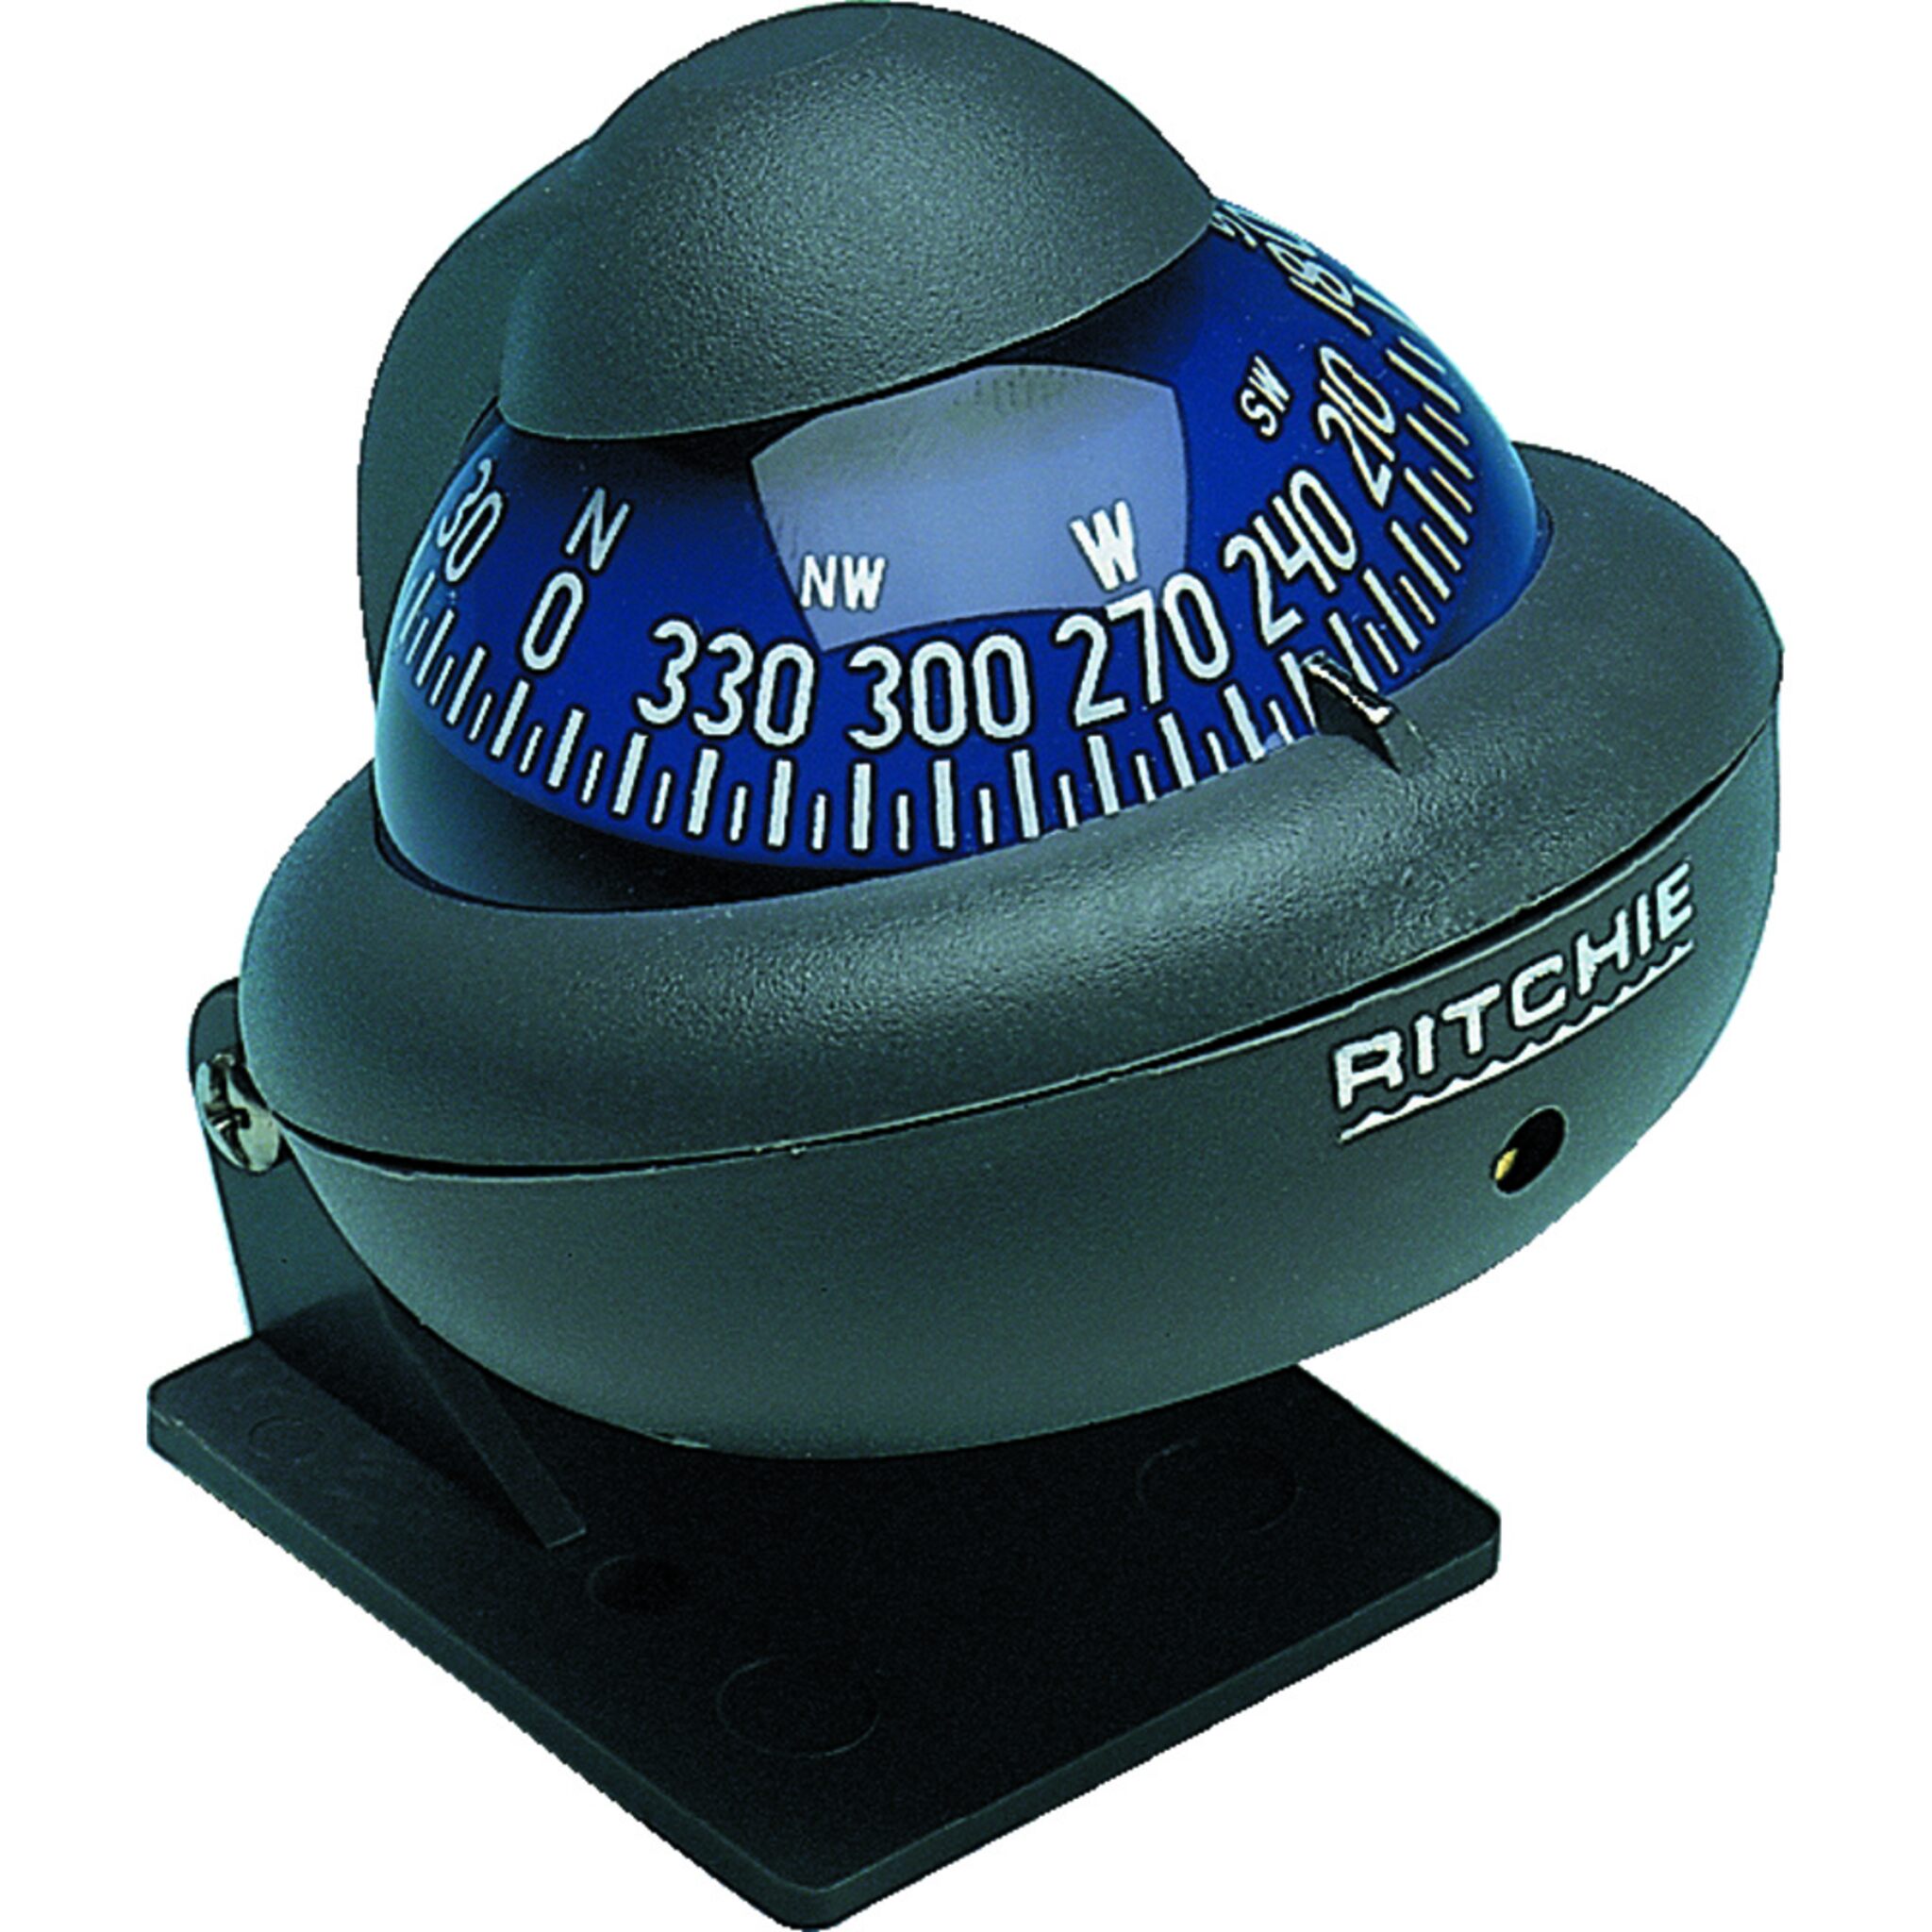 Ritchiesport X 10 universal compass